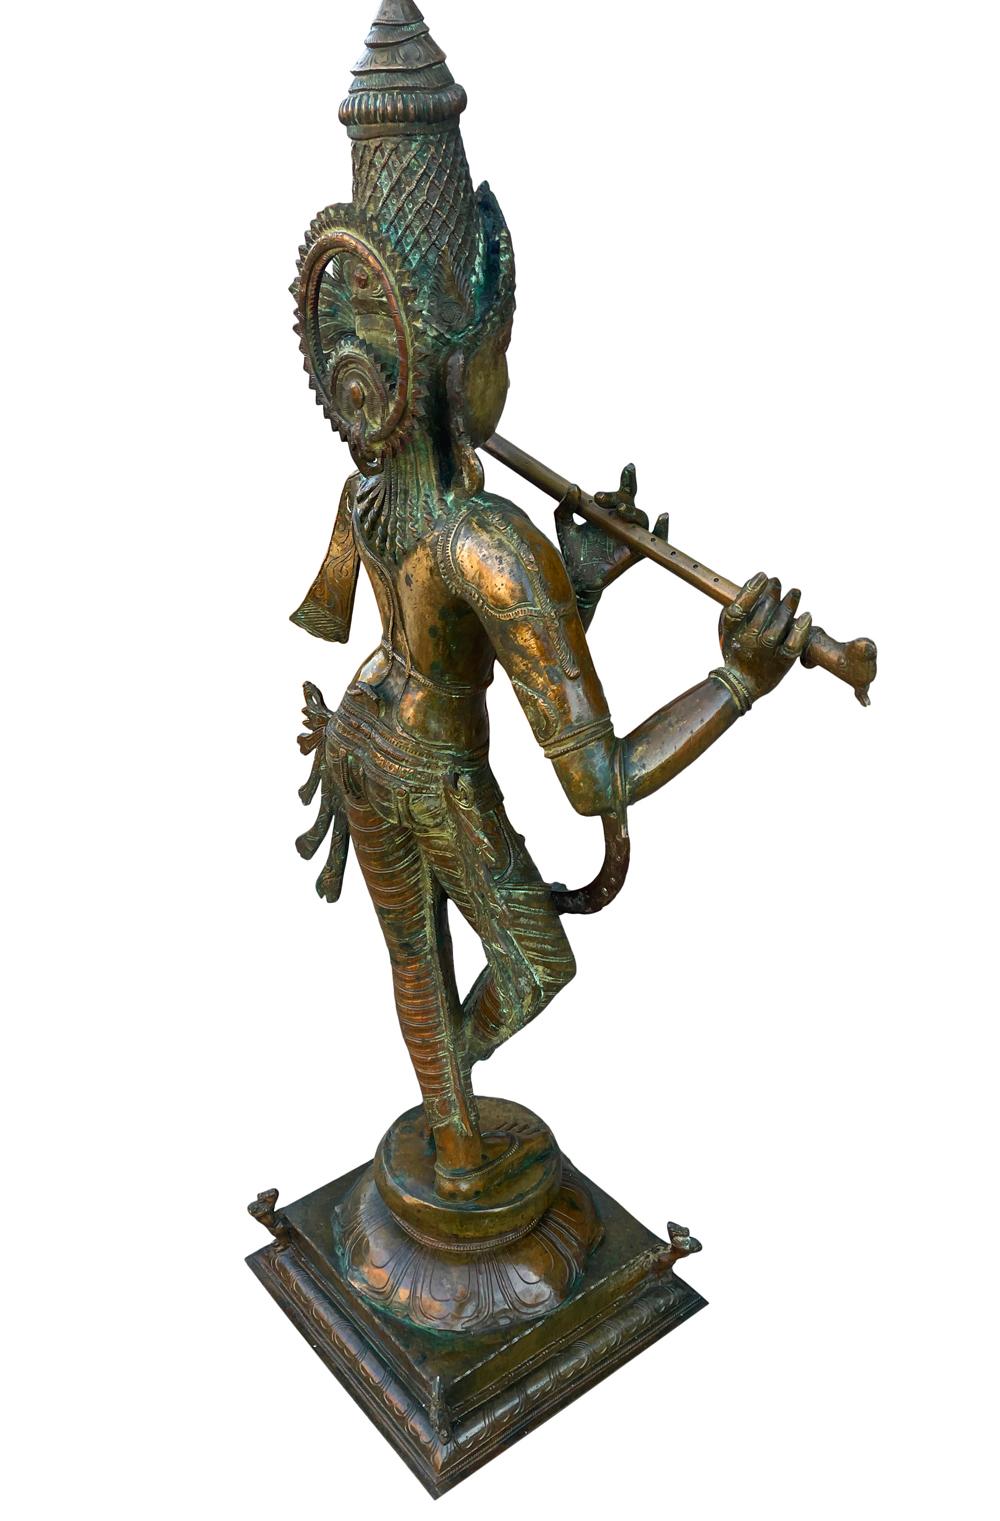 Indian Extra Large Cast Bronze Krishna India Statue or Sculpture Buddha 19th Century